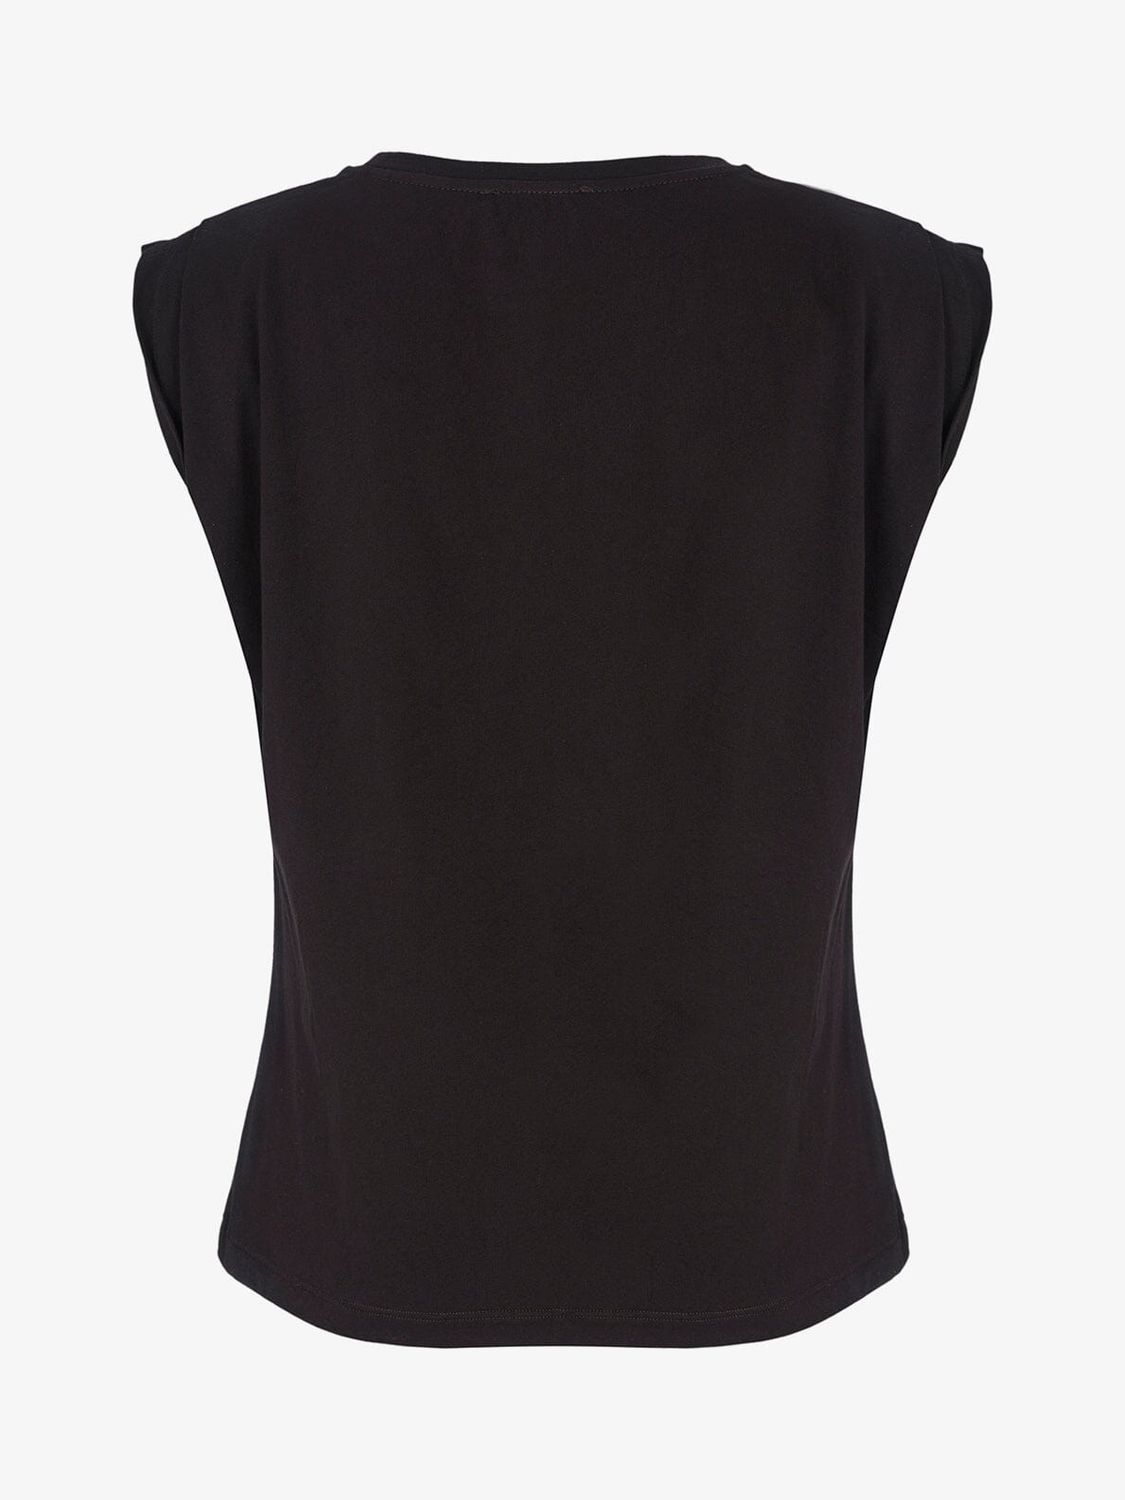 Mint Velvet Cotton Extended Shoulder T-Shirt, Black, L